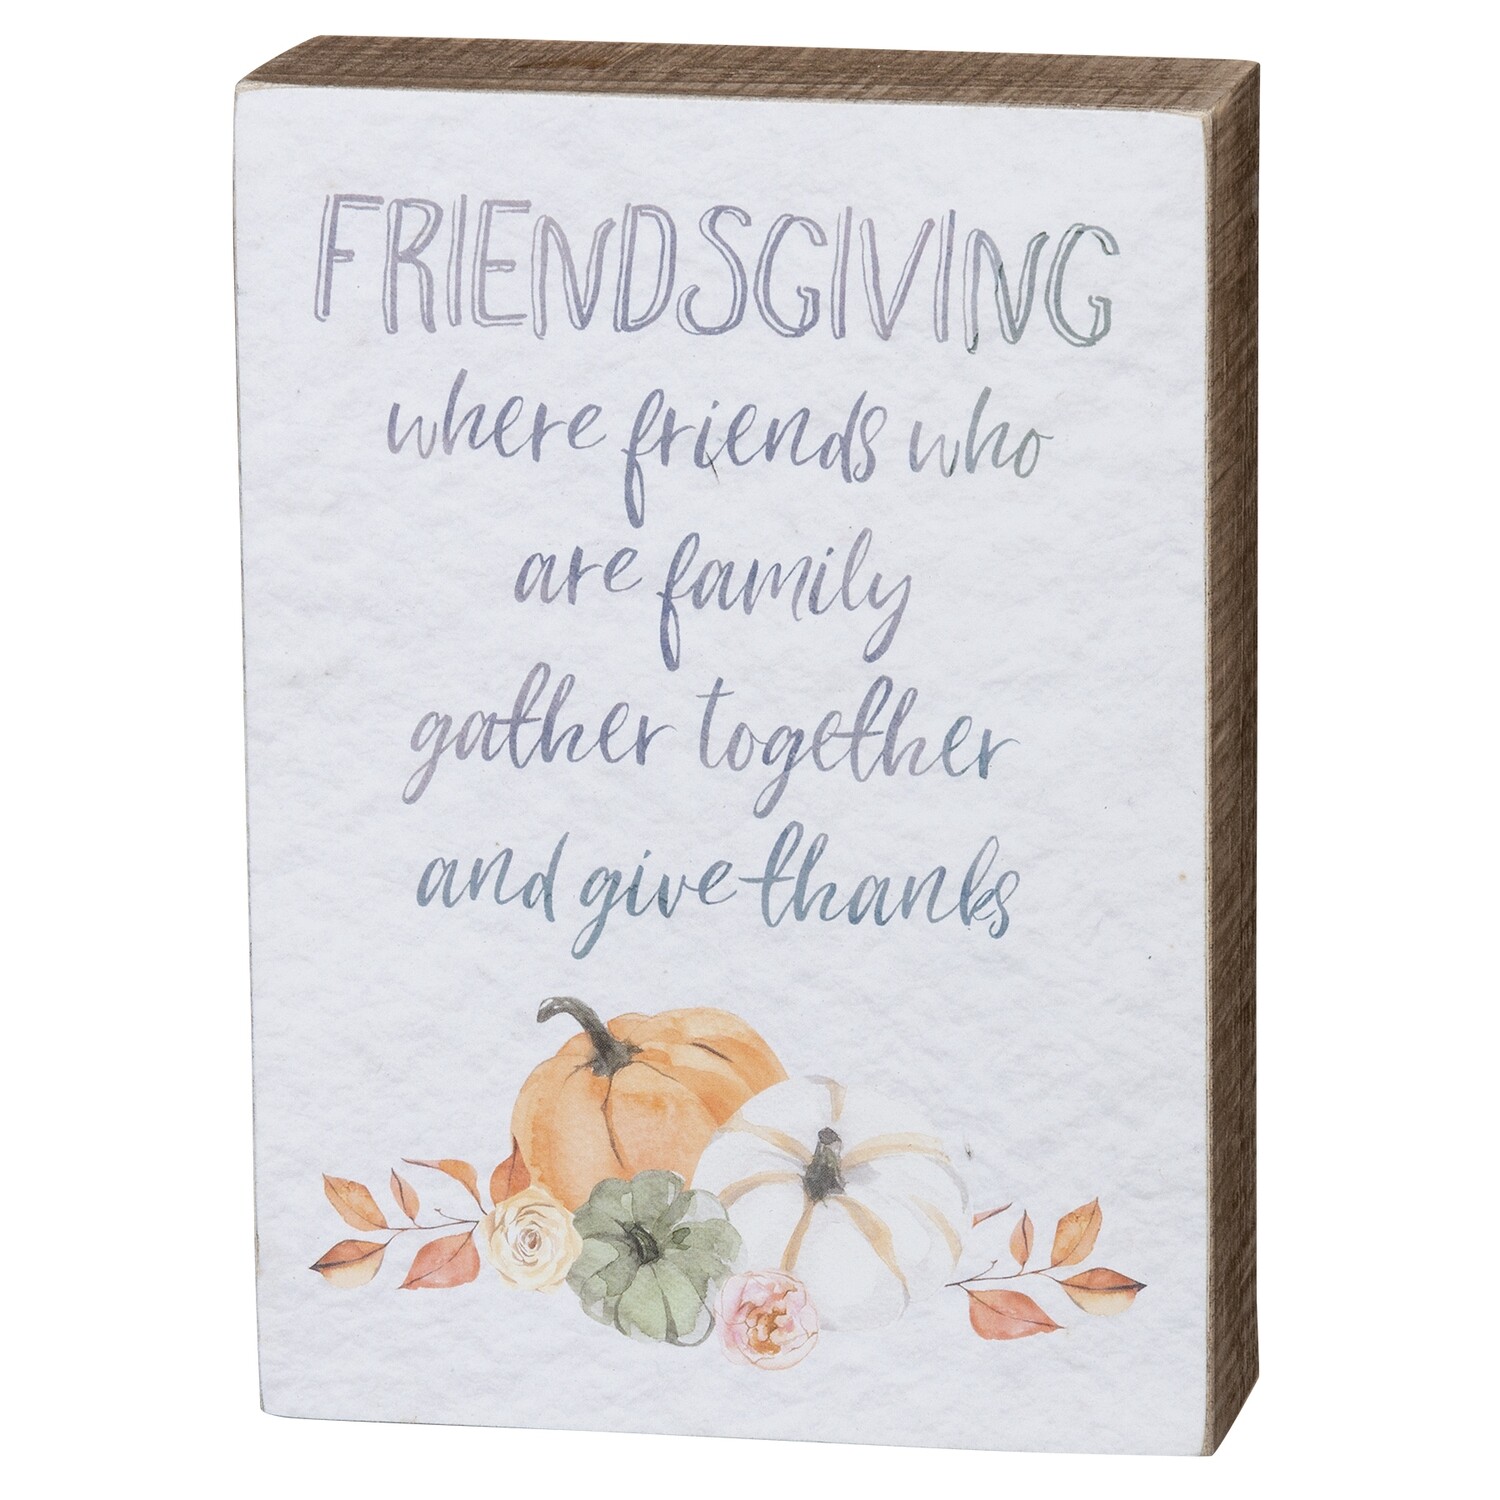 Friendsgiving Box Sign